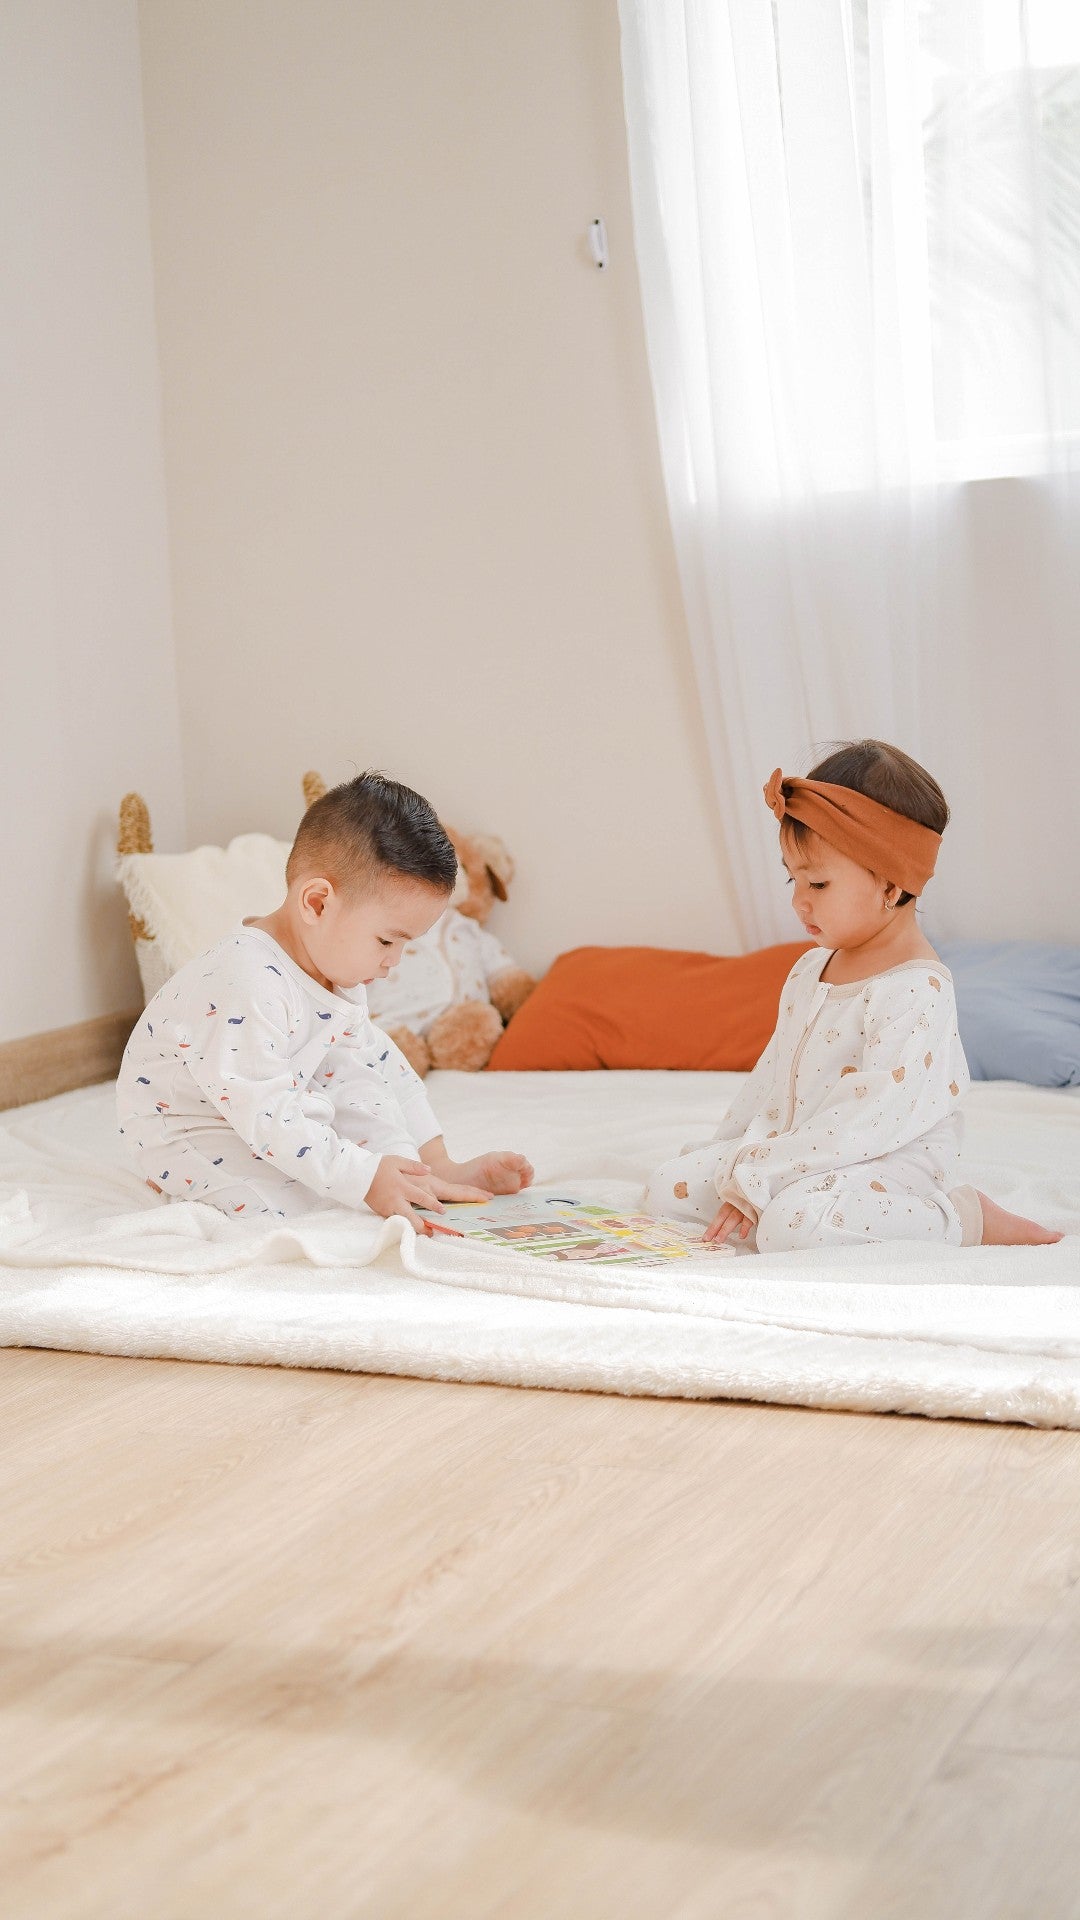 Nice Kids - Printed Sleepsuit (Jumper Bayi 0-2 Tahun)